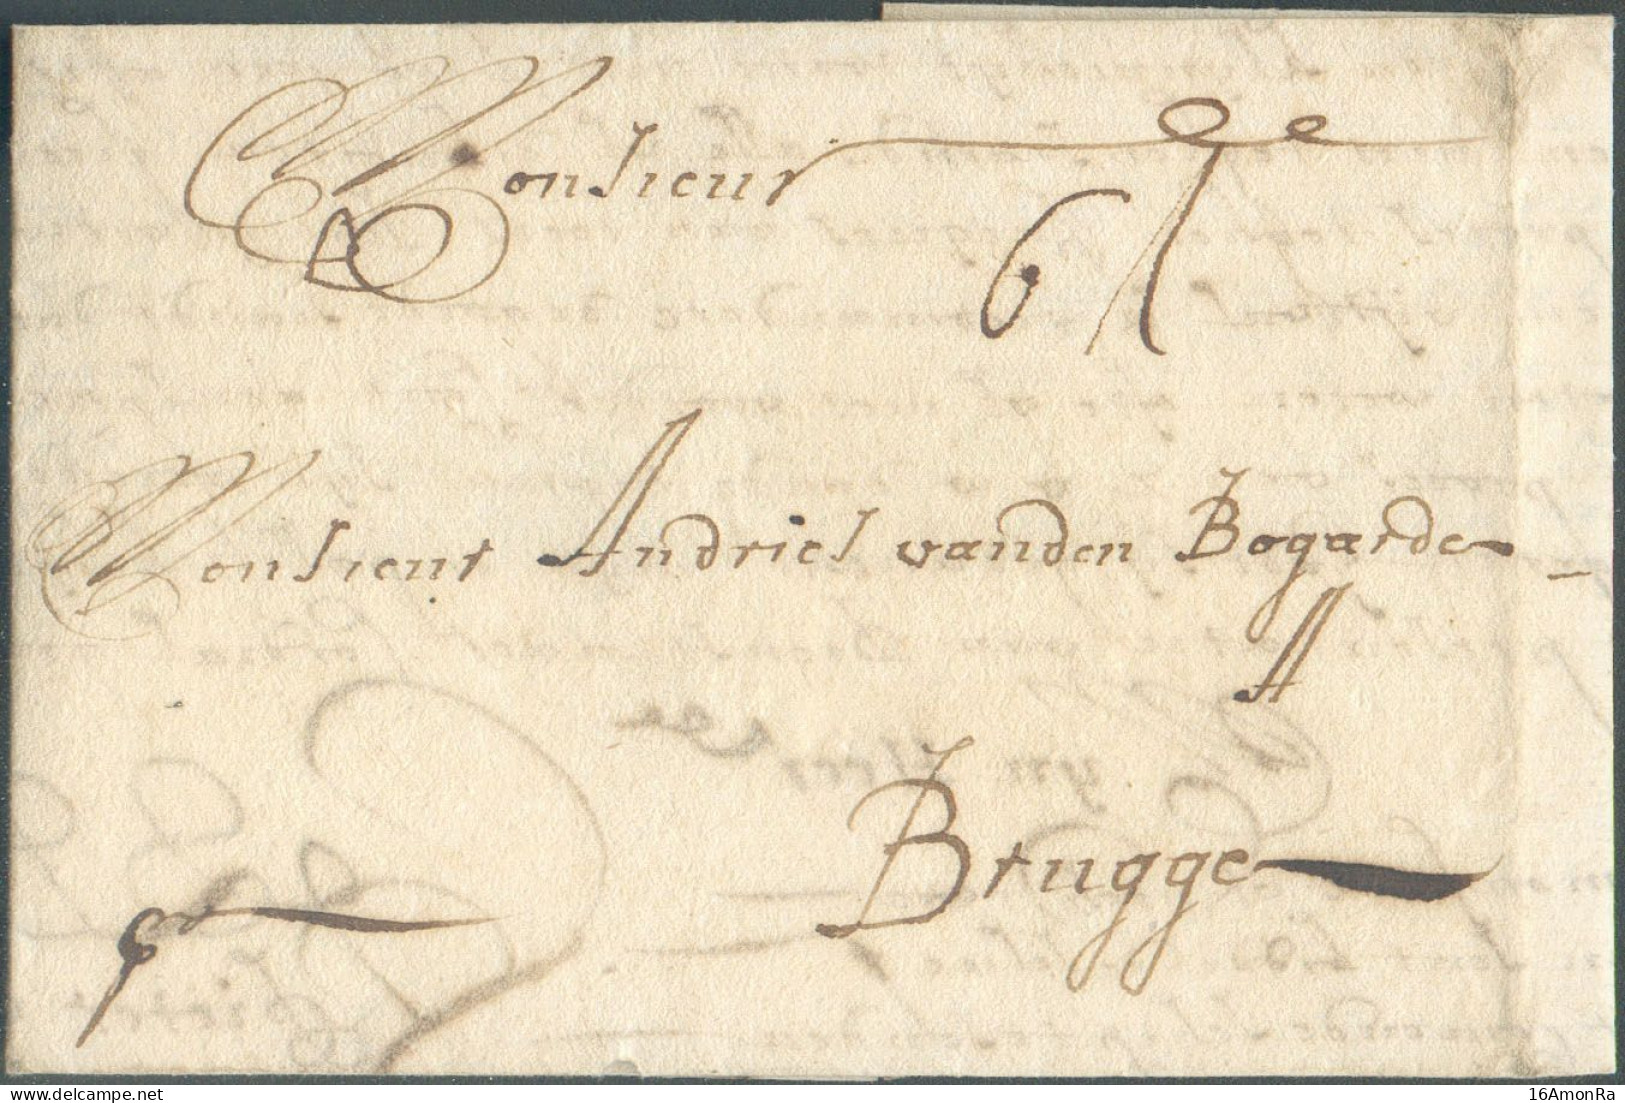 LAC De LONDON Le 23 Octobre 1699 Vers BRUGGE; Port '6' Shillings.  Superbe - 21367 - 1621-1713 (Spaanse Nederlanden)